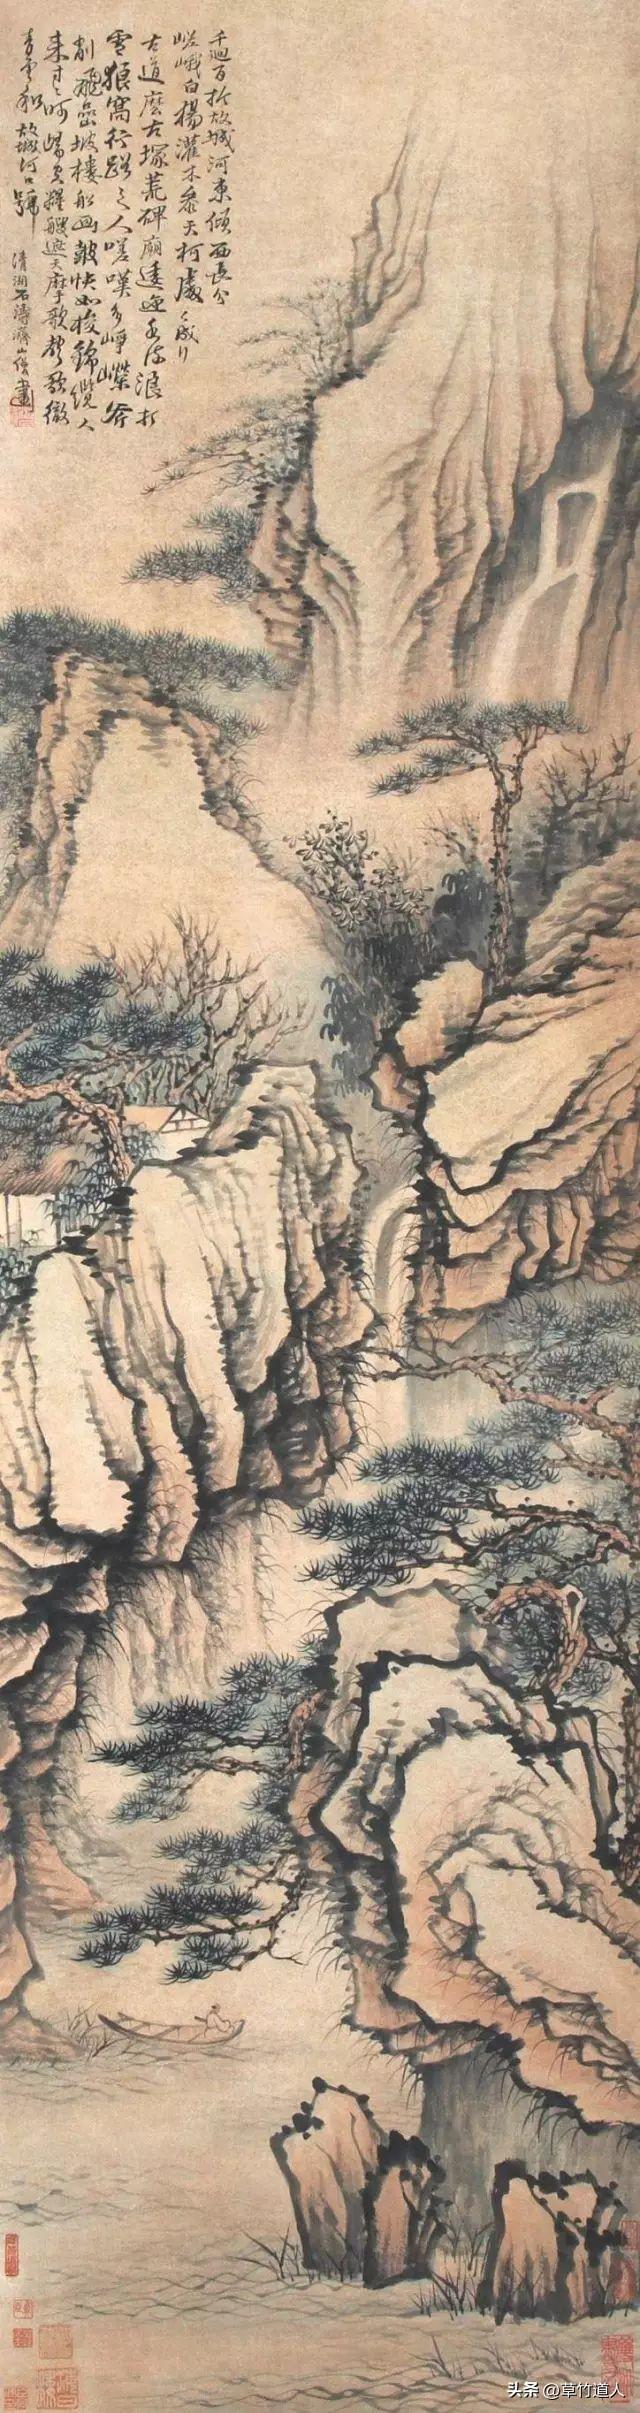 I.：中国传统绘画中的画法与画理的关系